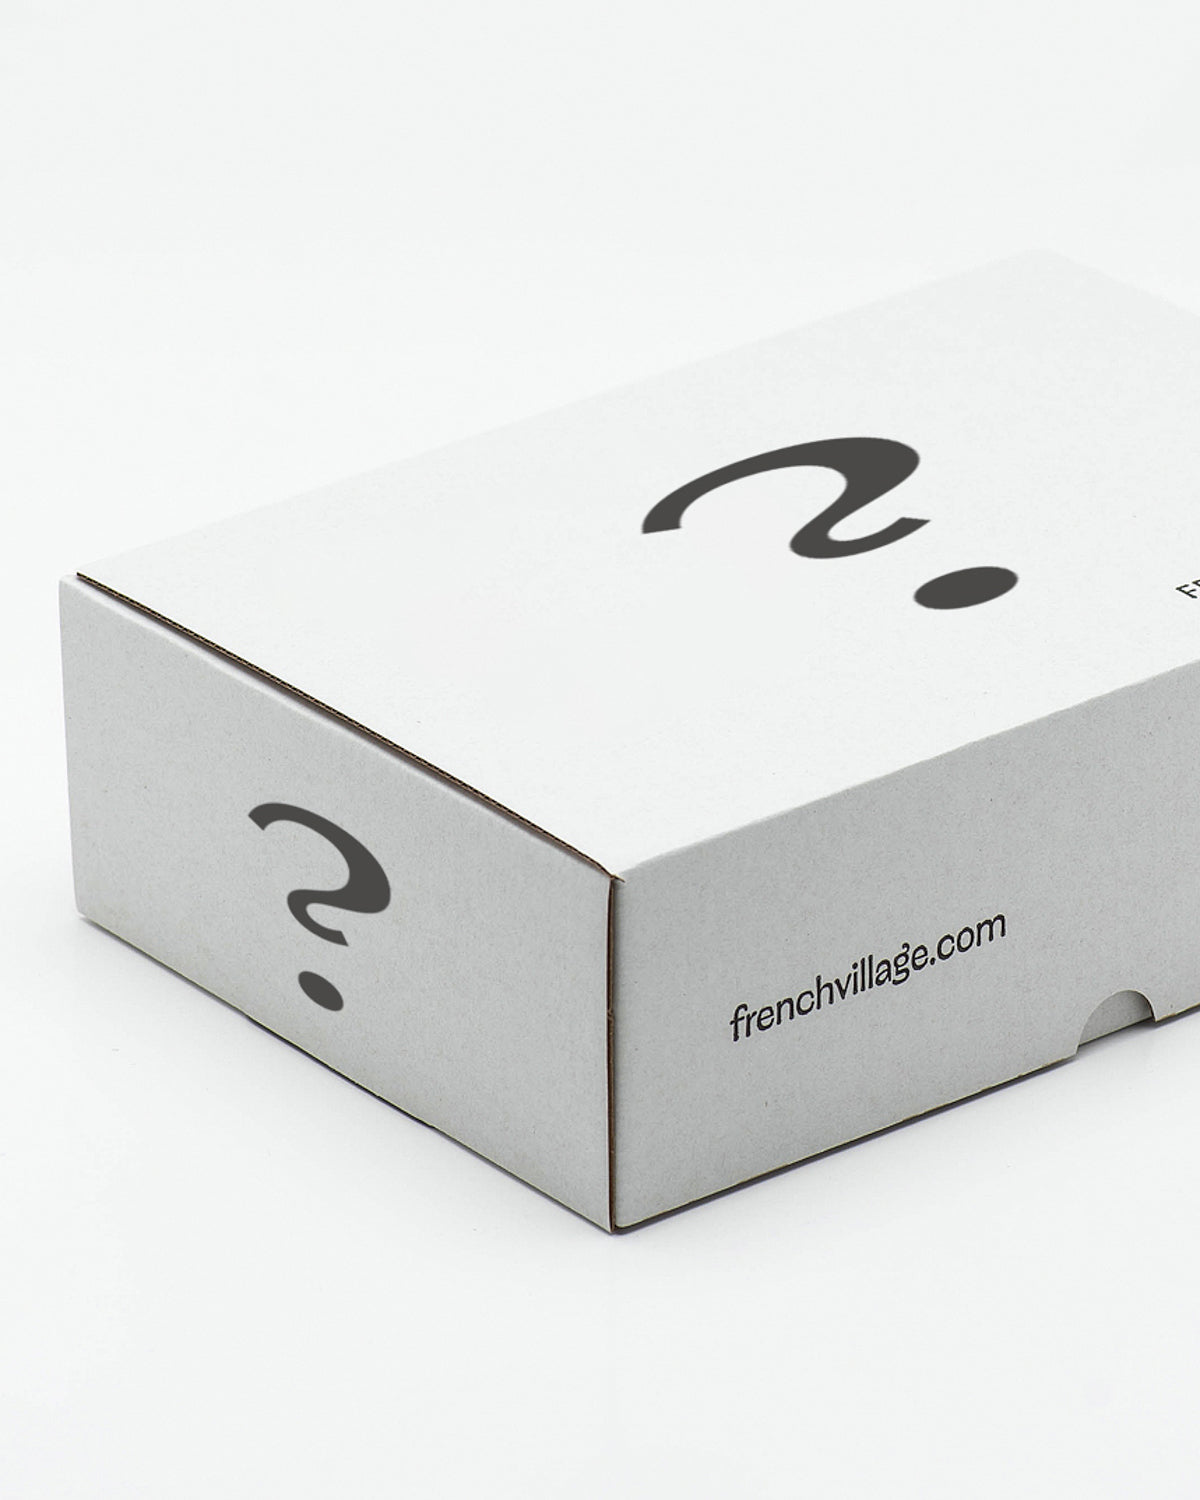 10€ mystery box 💶😲 #Lithuania #Latvia #eesti #fyp #mysterybox